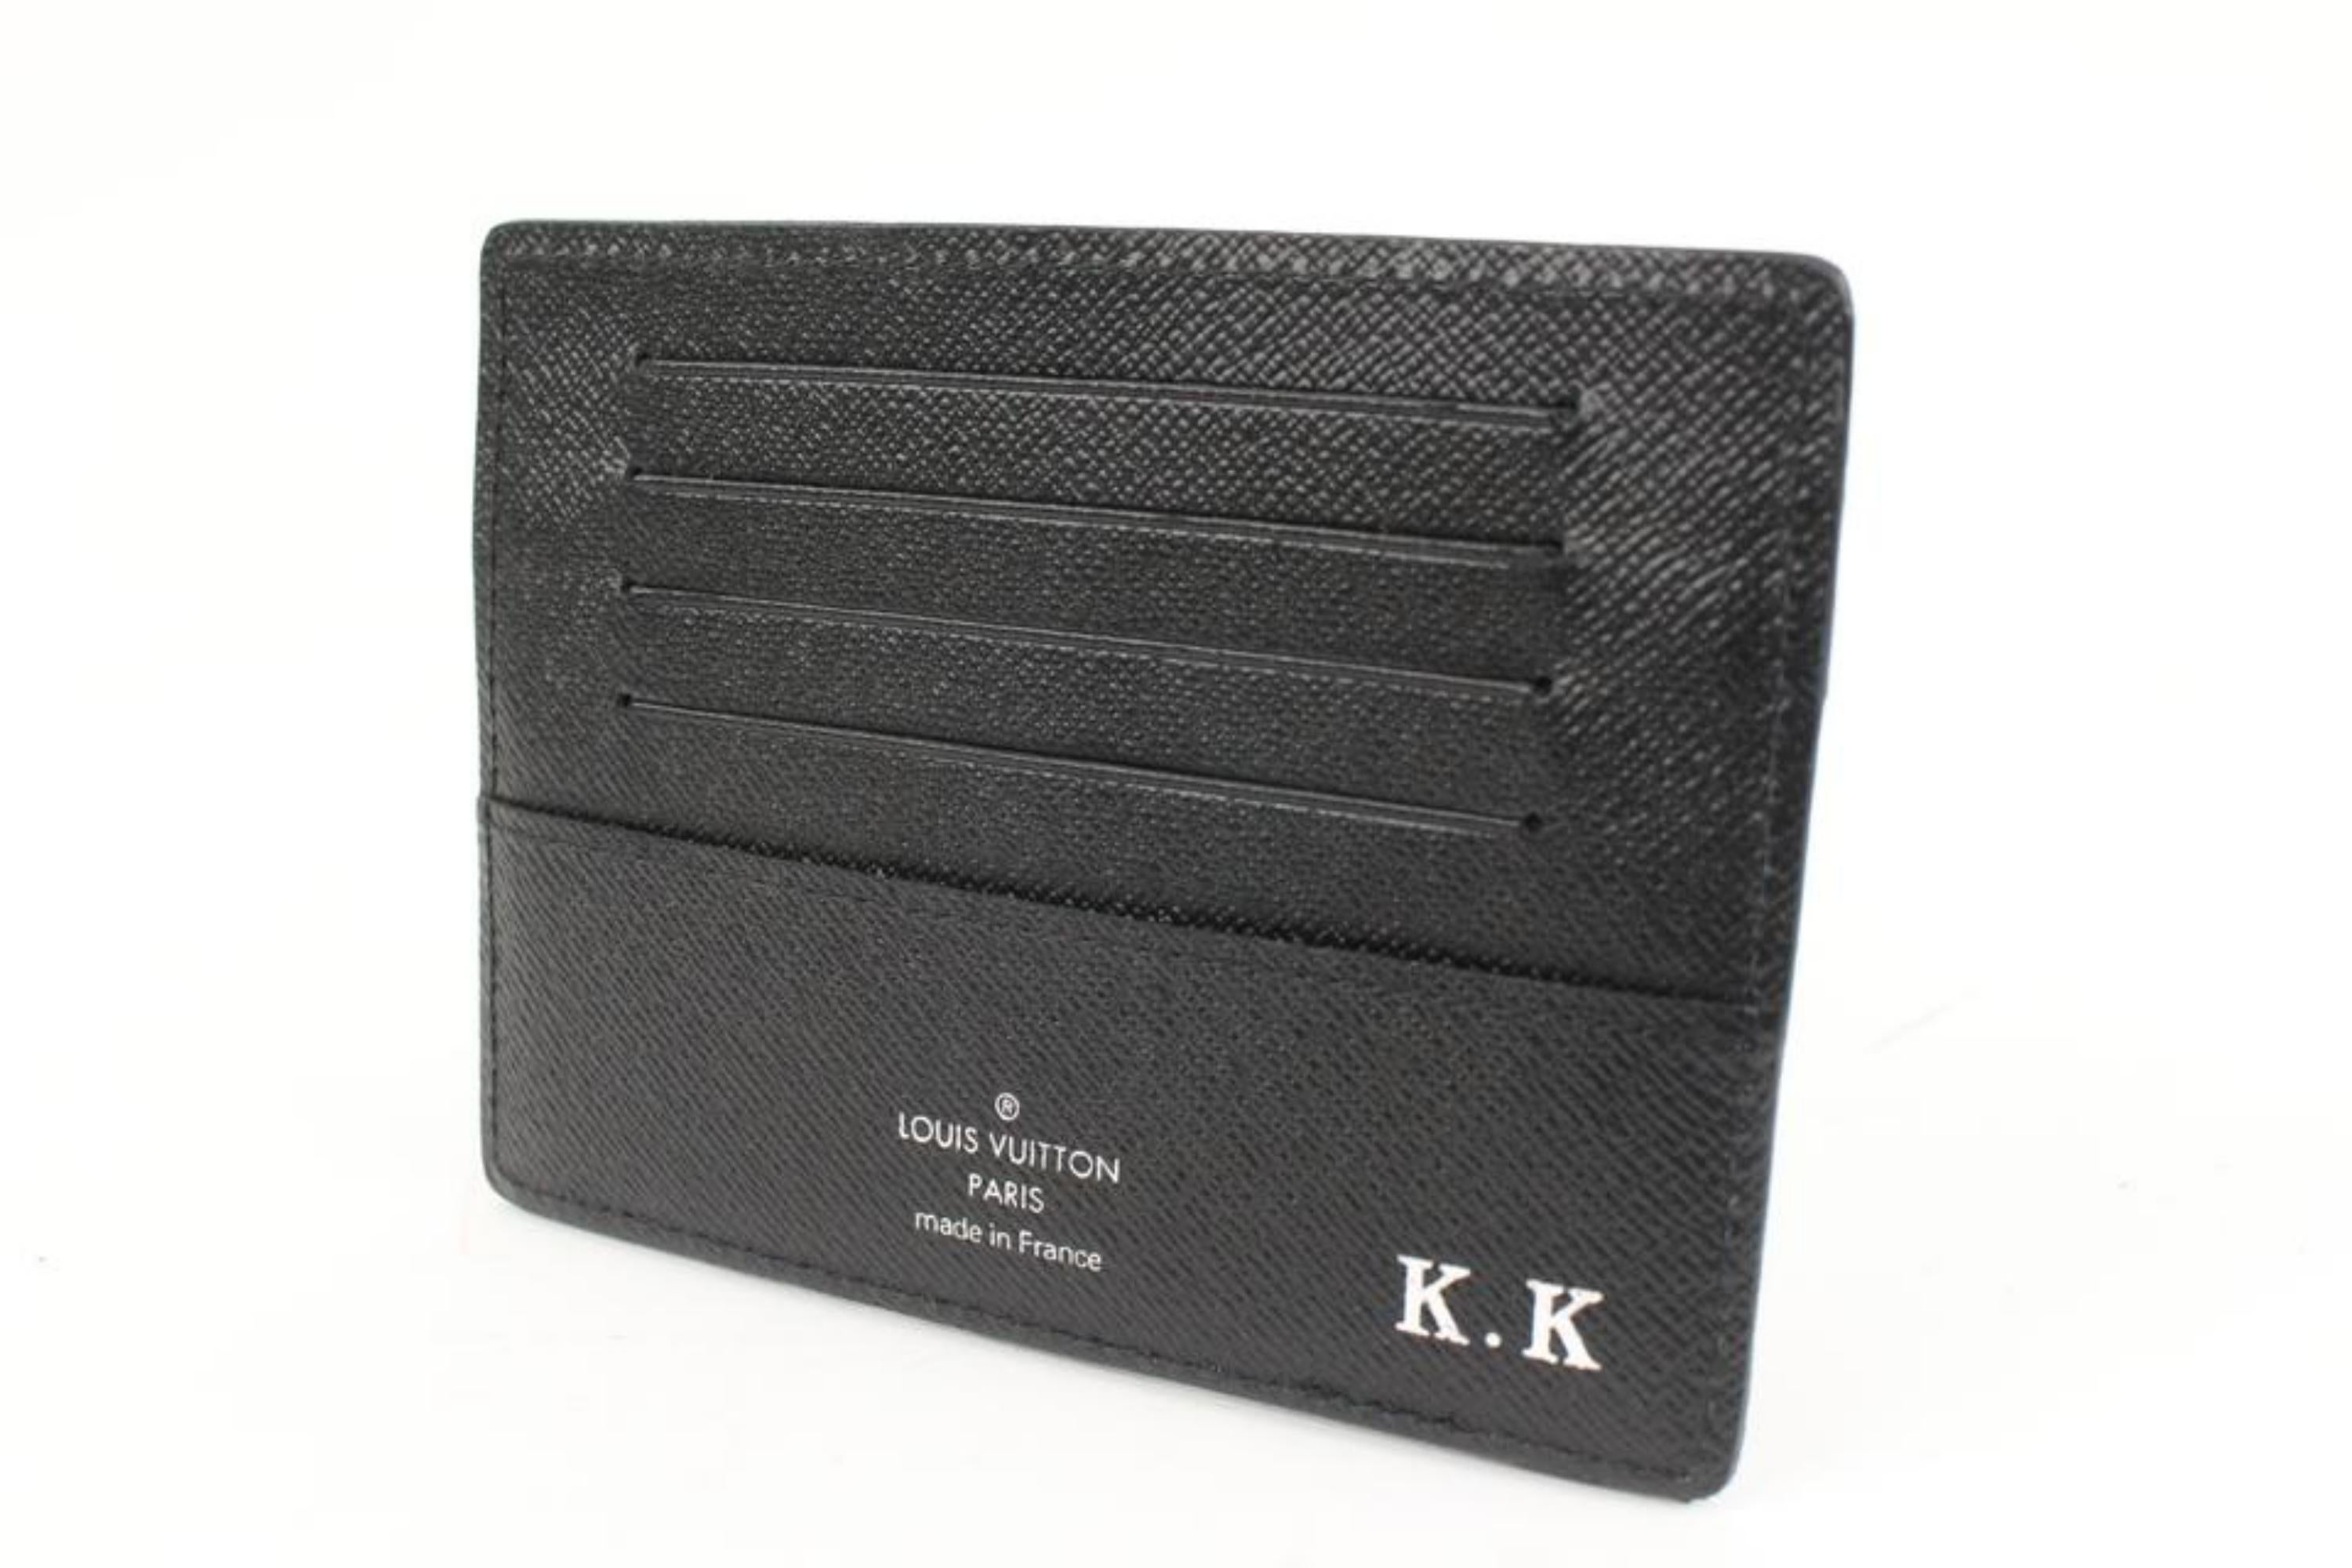 Louis Vuitton Black x Grey Damier Graphite Card Holder Wallet Case 10lv321s For Sale 2